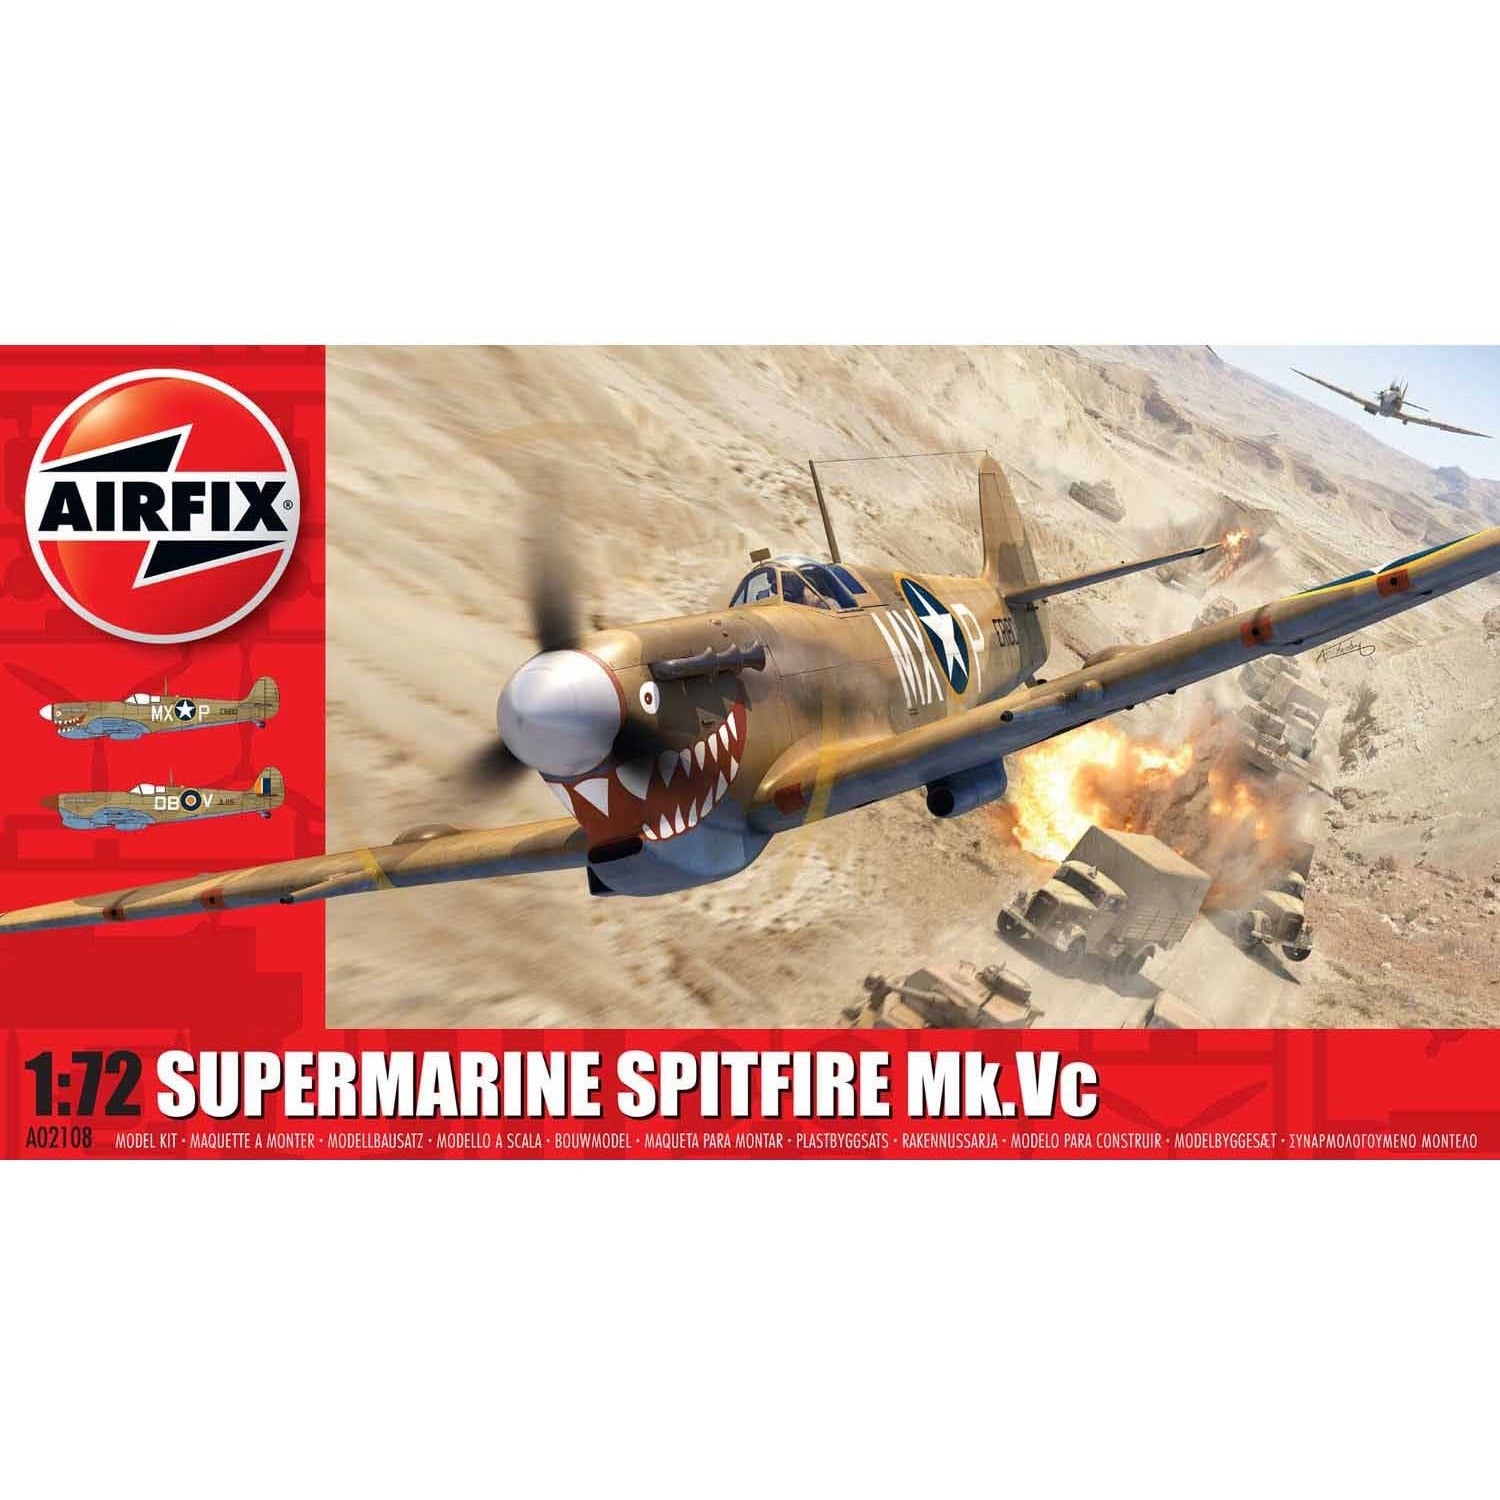 Supermarine Spitfire Mk.Vc 1/72 #02108 by Airfix